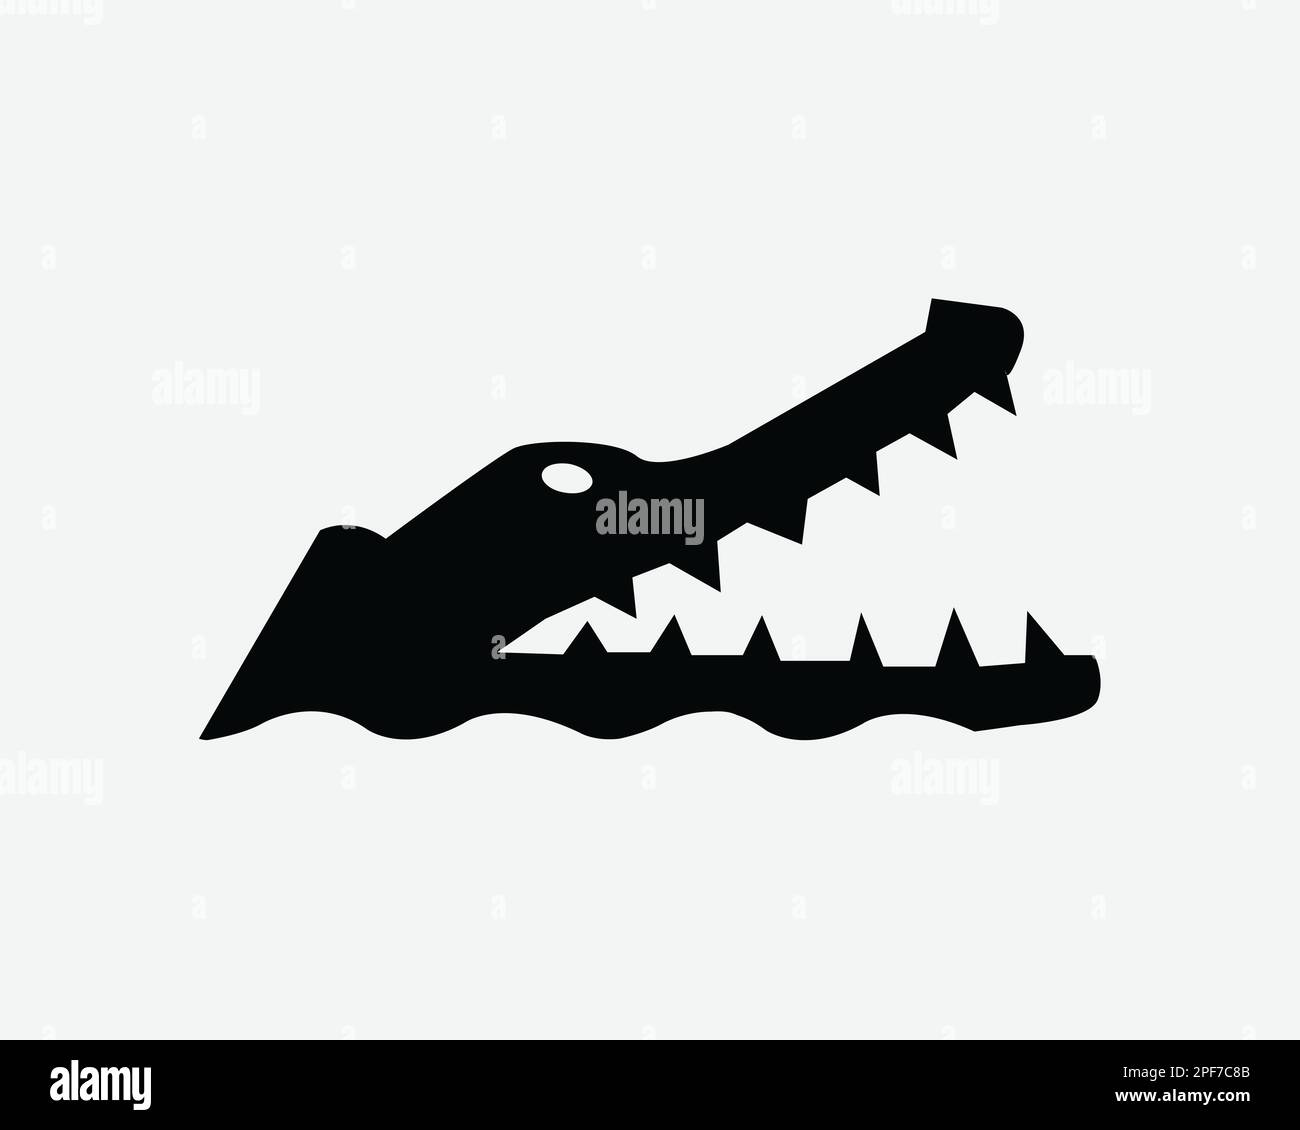 Alligatorkopf Symbol Gator Krokodil Reptil Offener Mund Kiefer Vektor Schwarzweiß Silhouettensymbol Schild Grafikclipart Bilddarstellung Piktogramm Stock Vektor